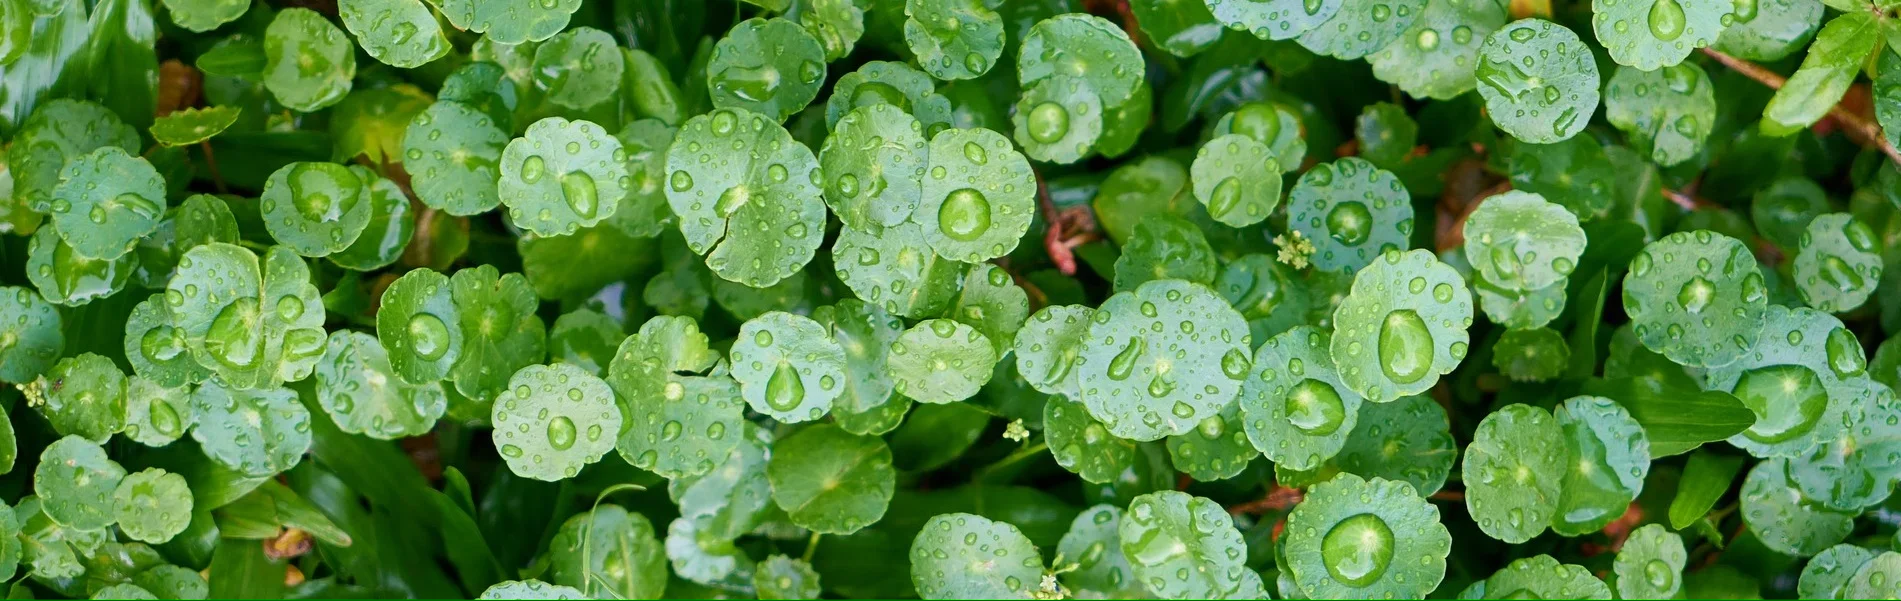 Groene blaadjes met waterdruppels